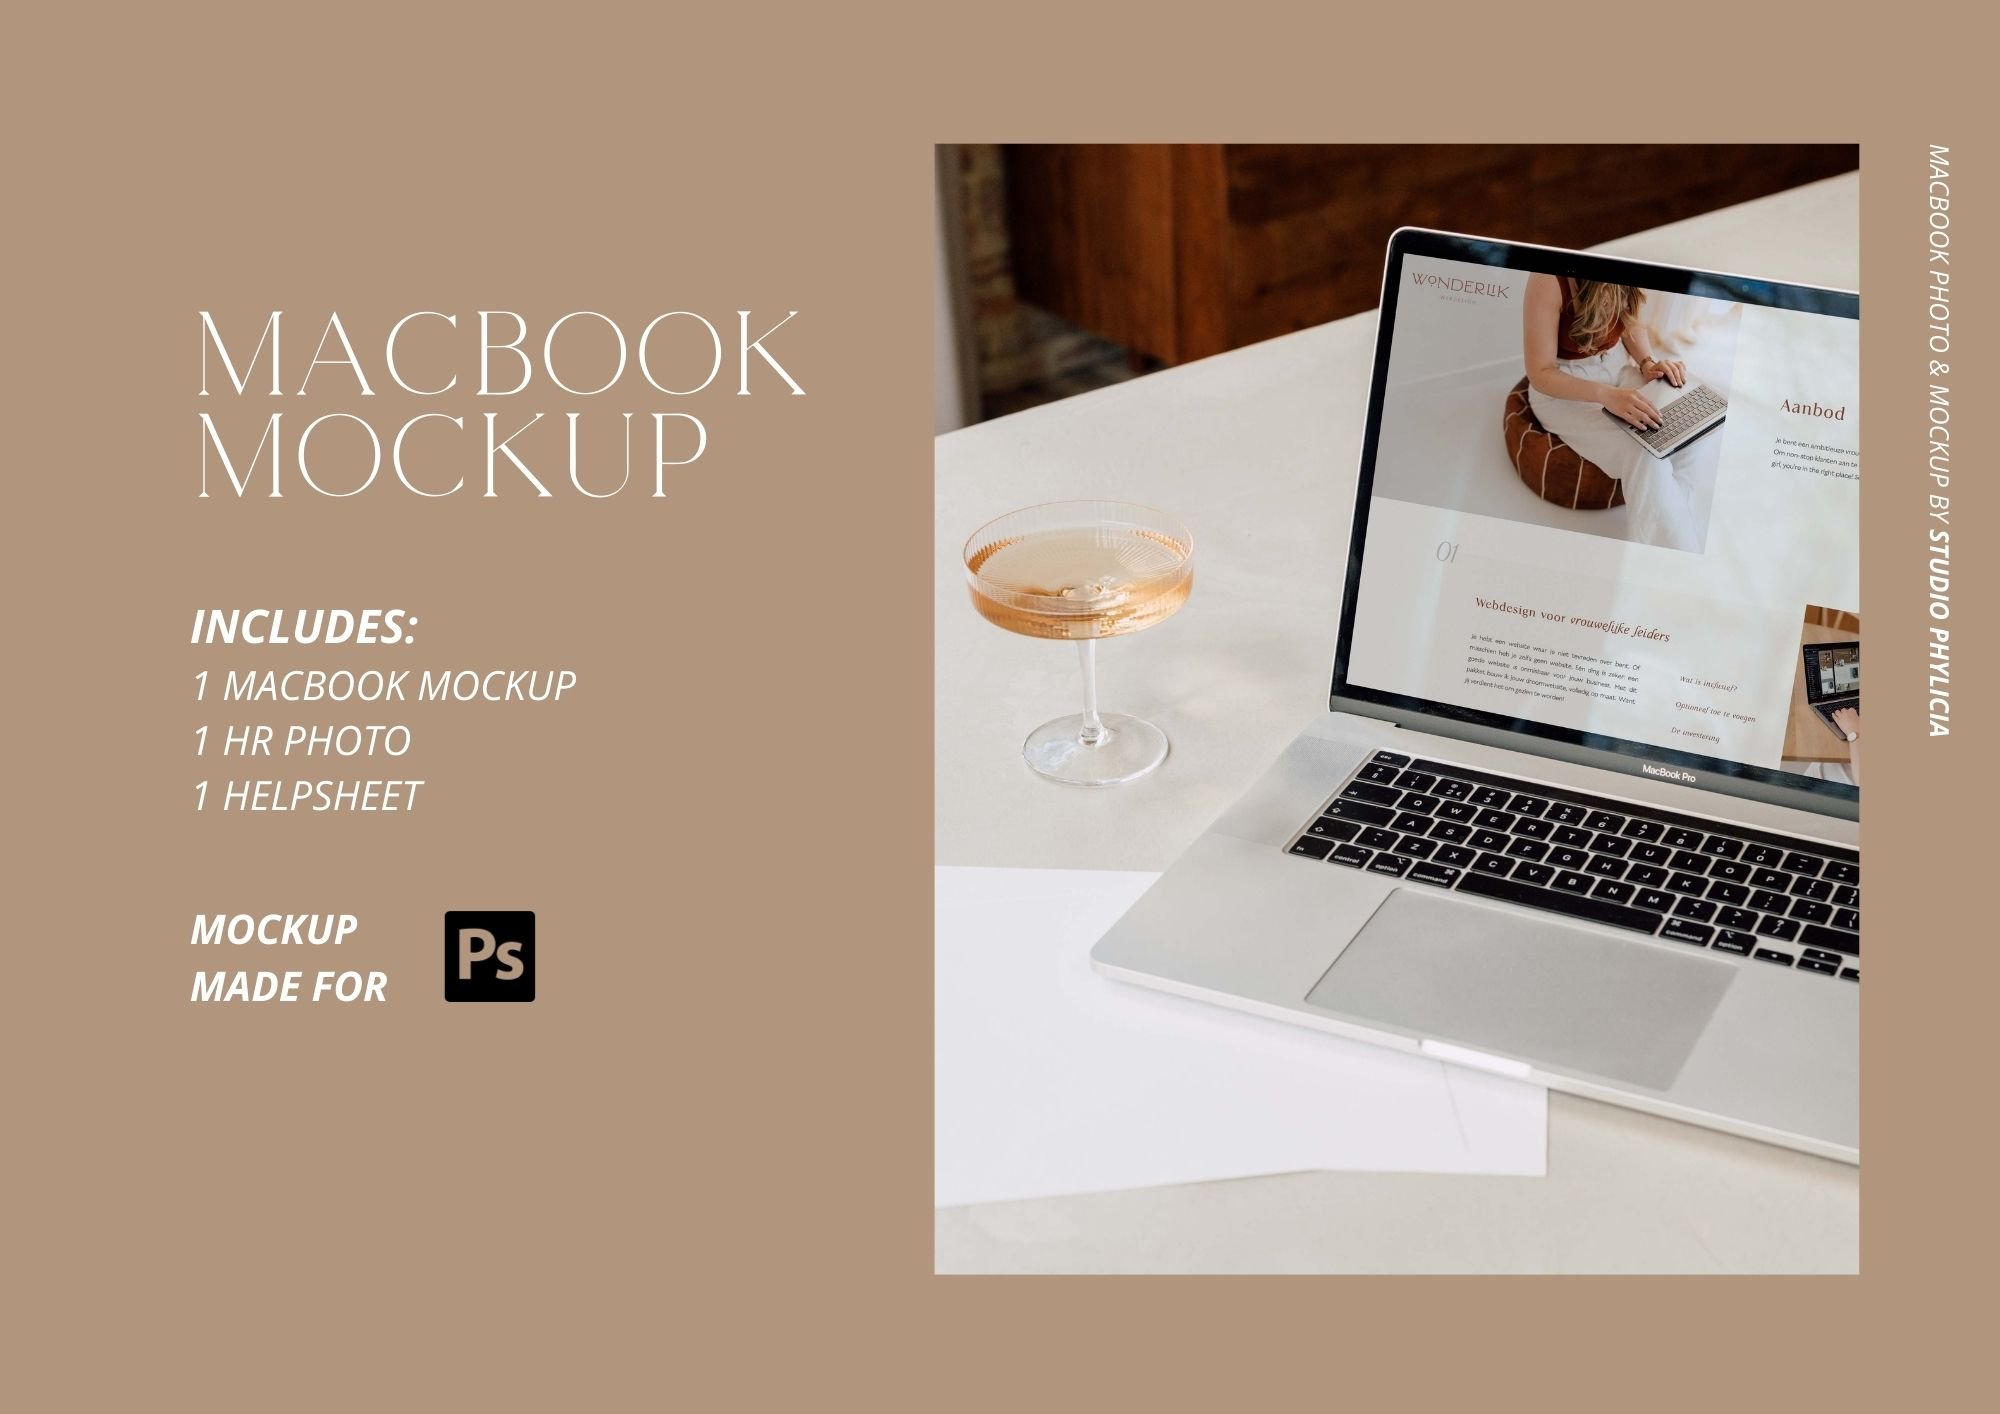 Macbook Mockup, RUBY 9 cover image.